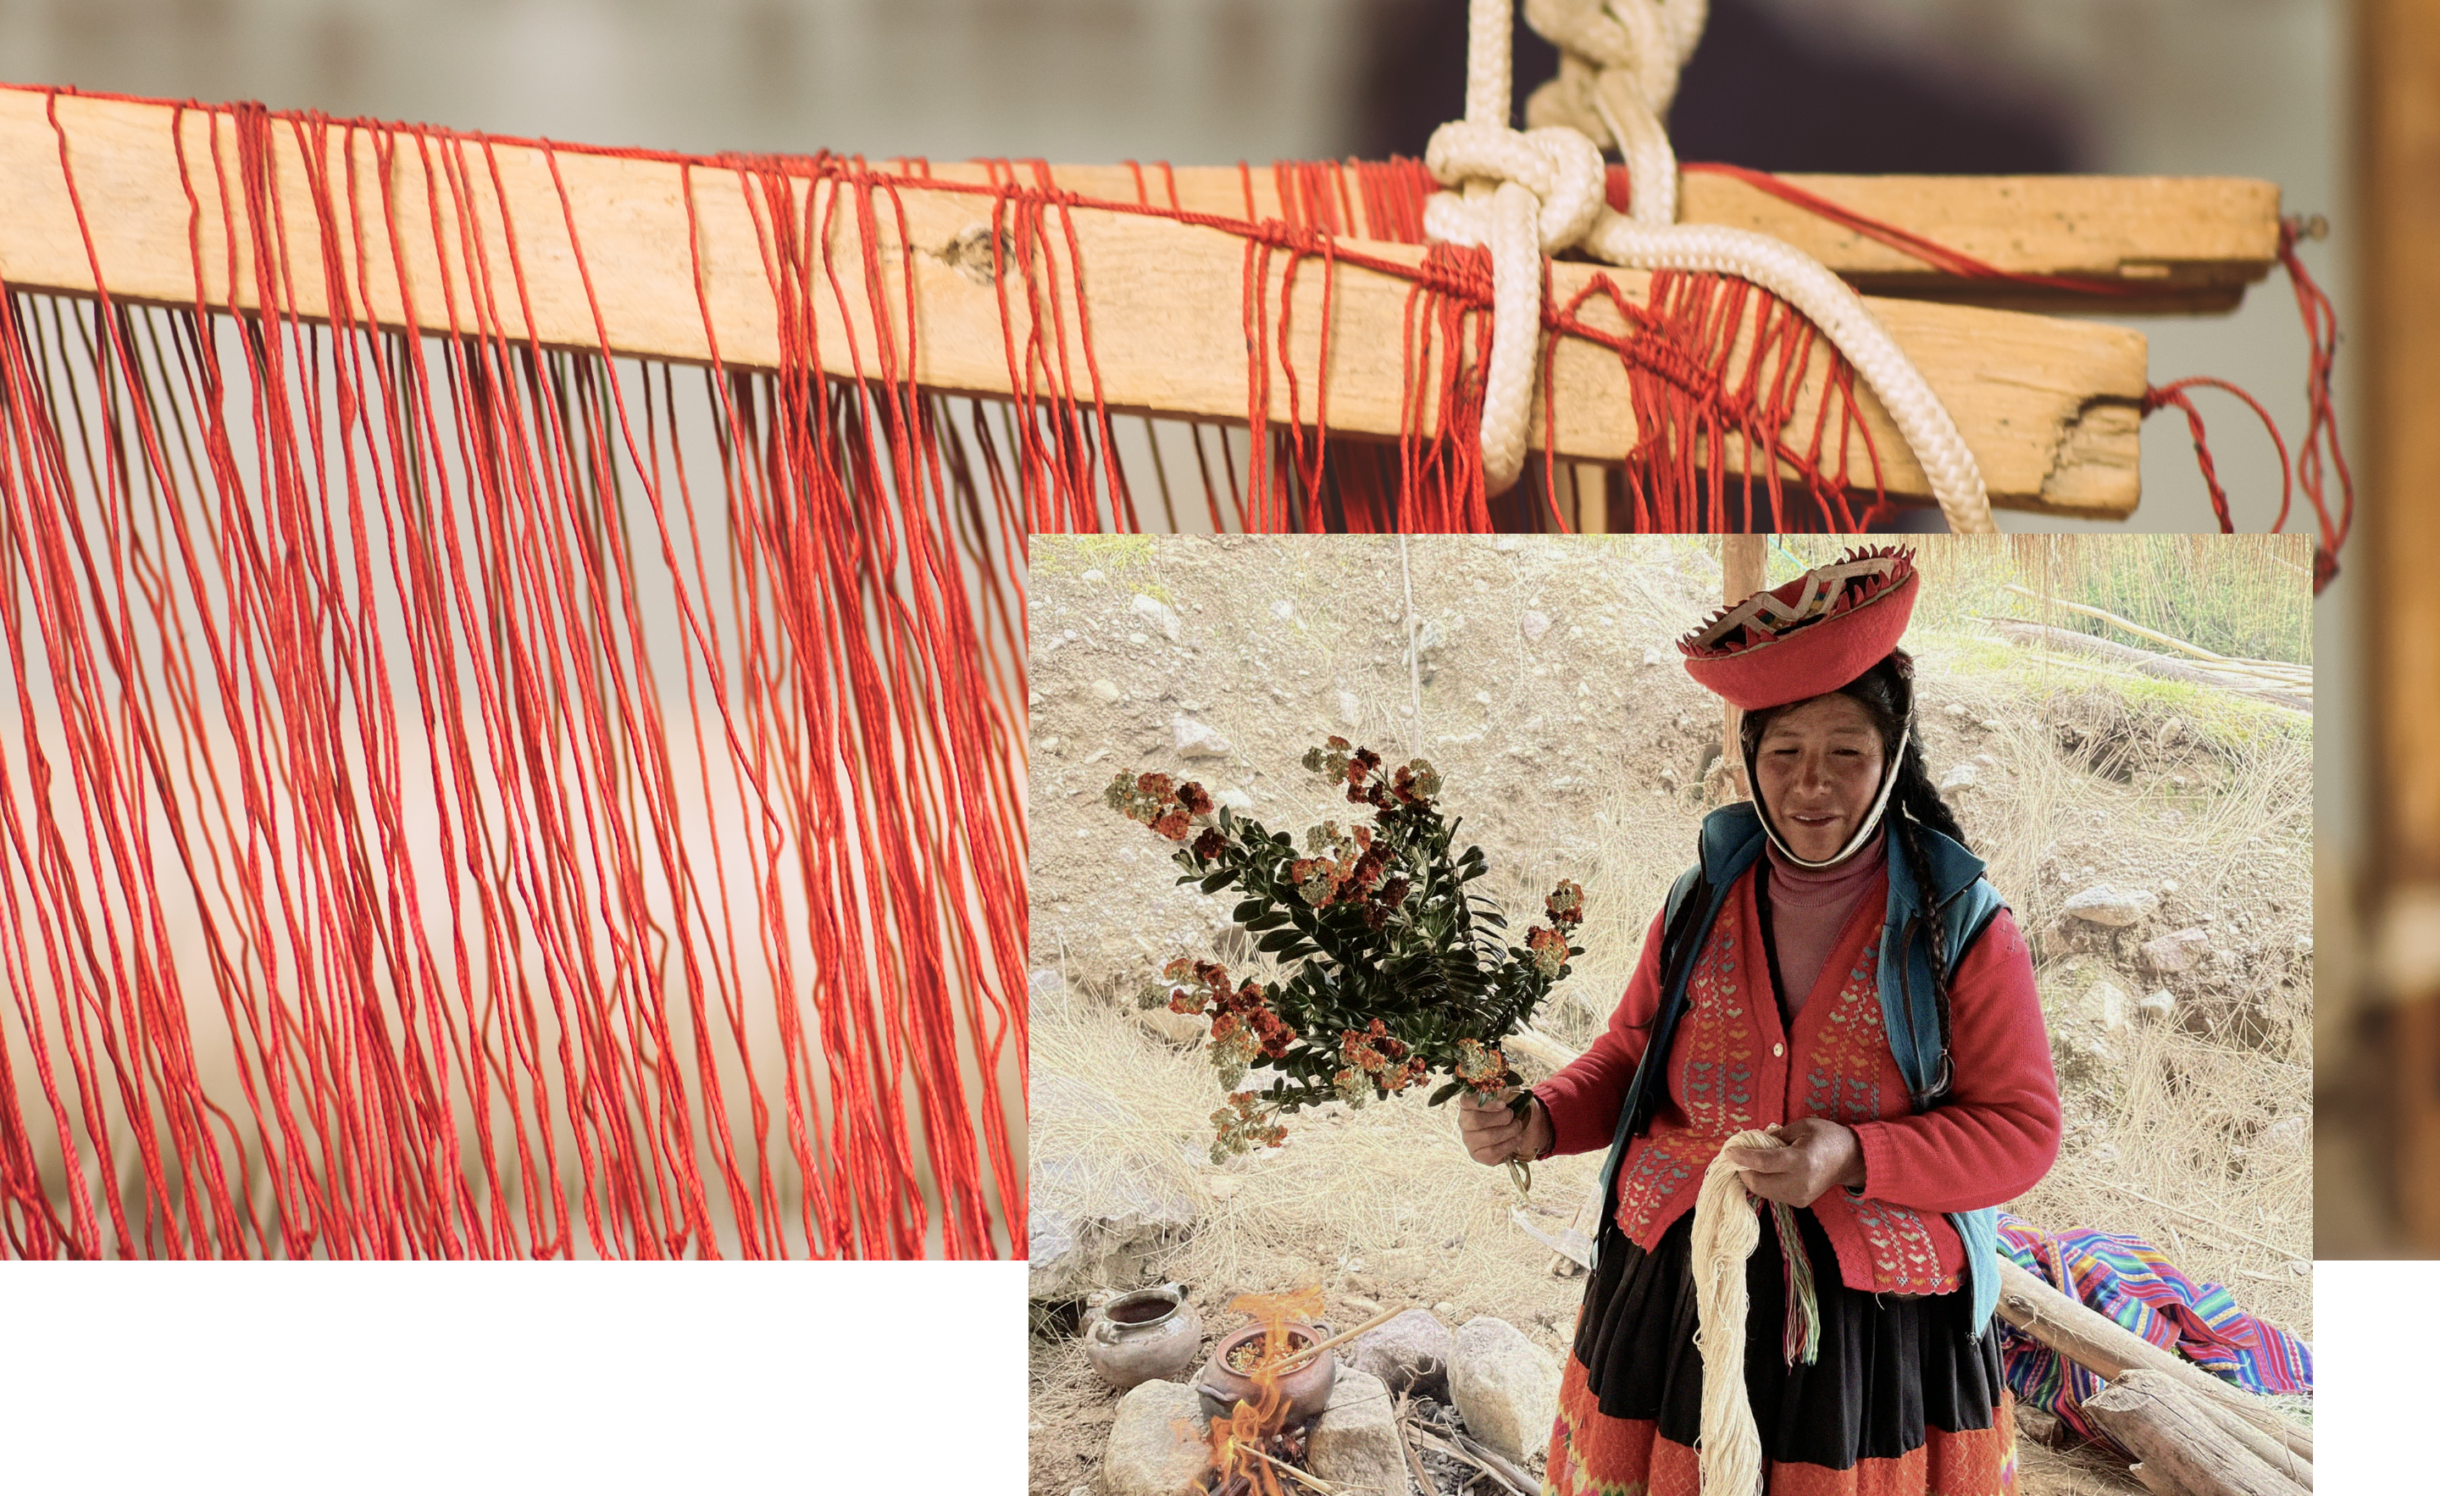 Students learned how local Peruvian women create yarn before back to school season